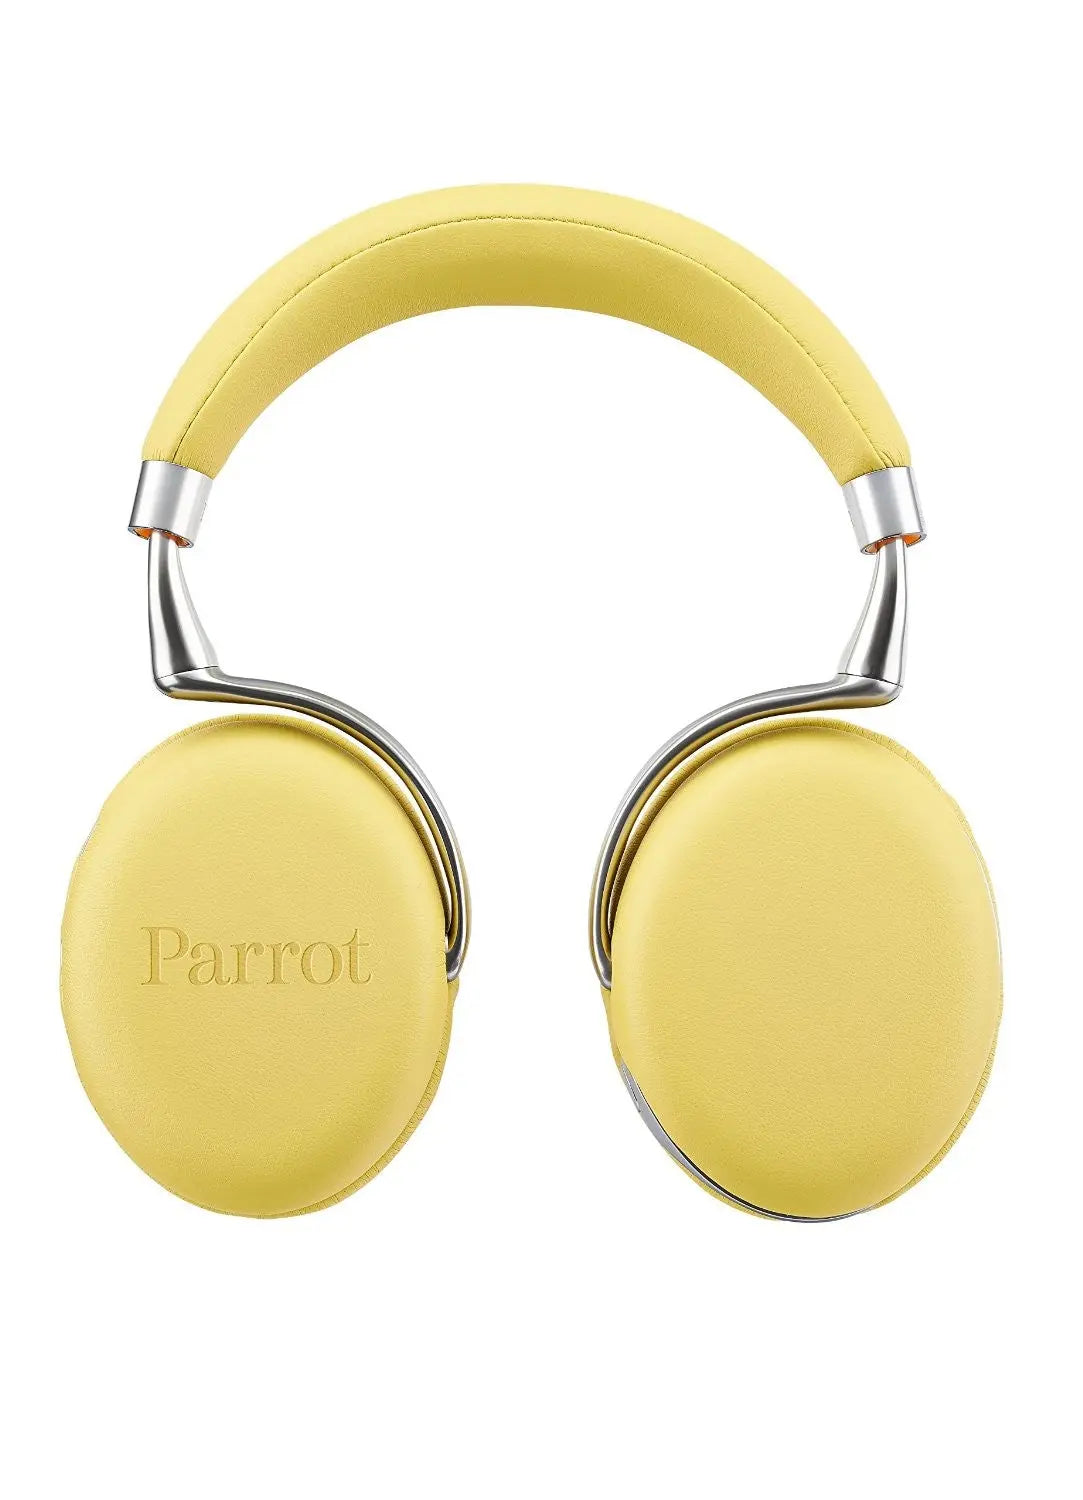 Parrot ZiK 2.0 by Philippe Starck Jaune - Casque audio Bluetooth Parrot